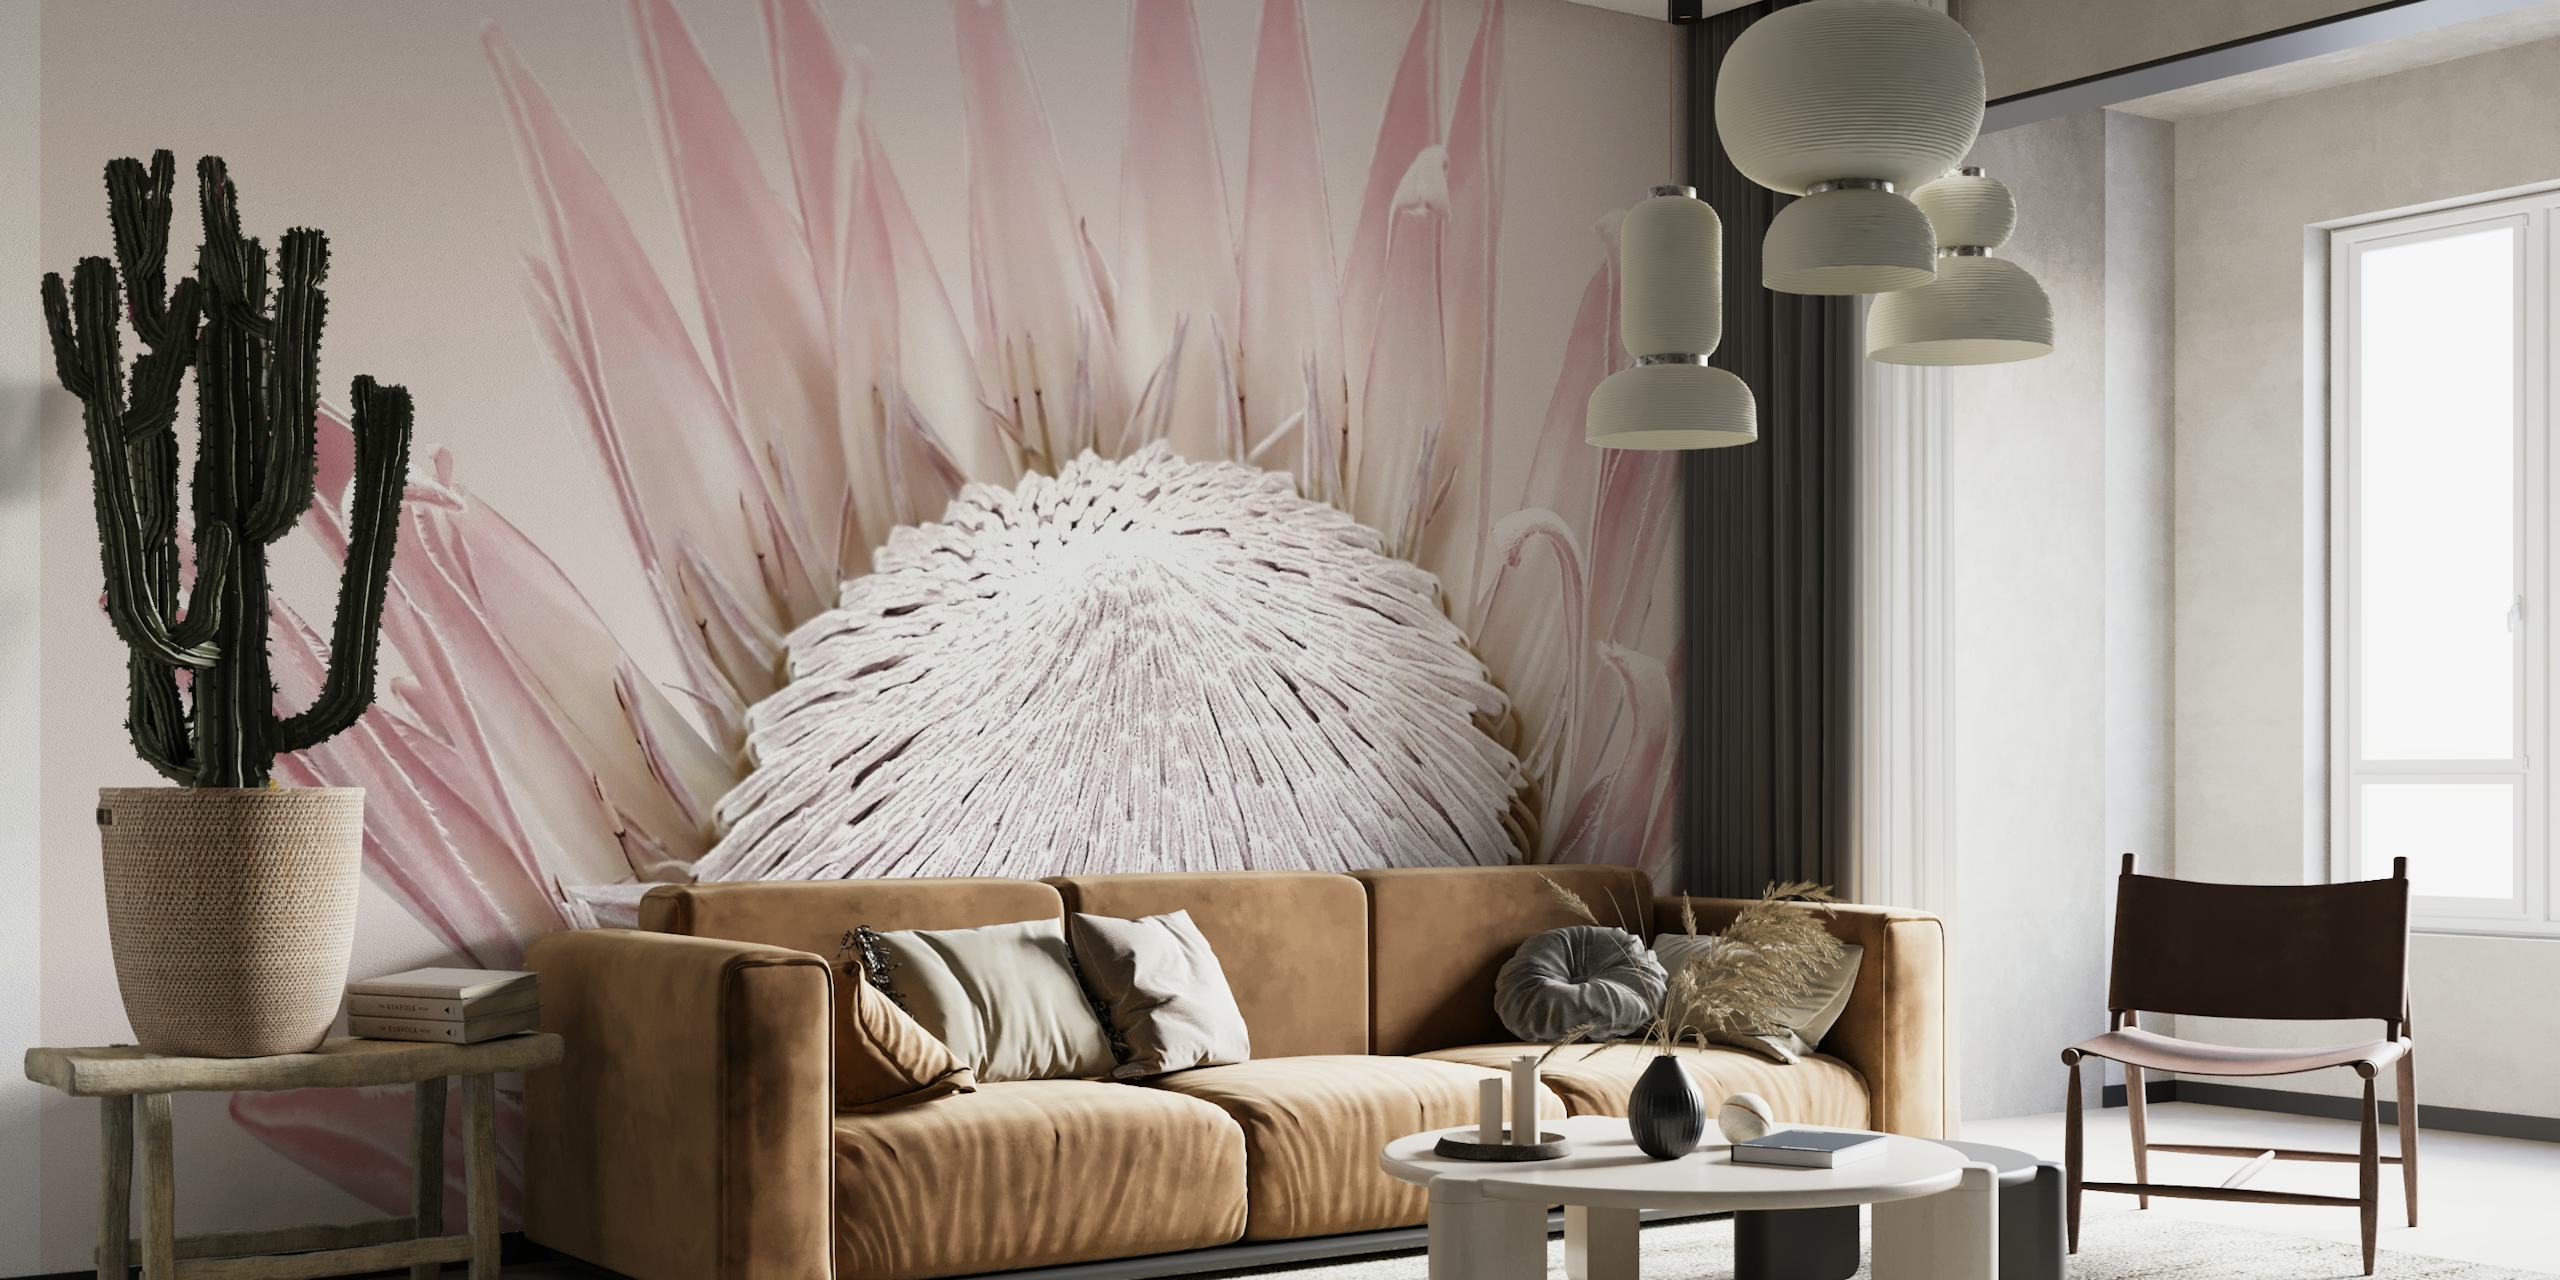 Pink King Protea Flower behang